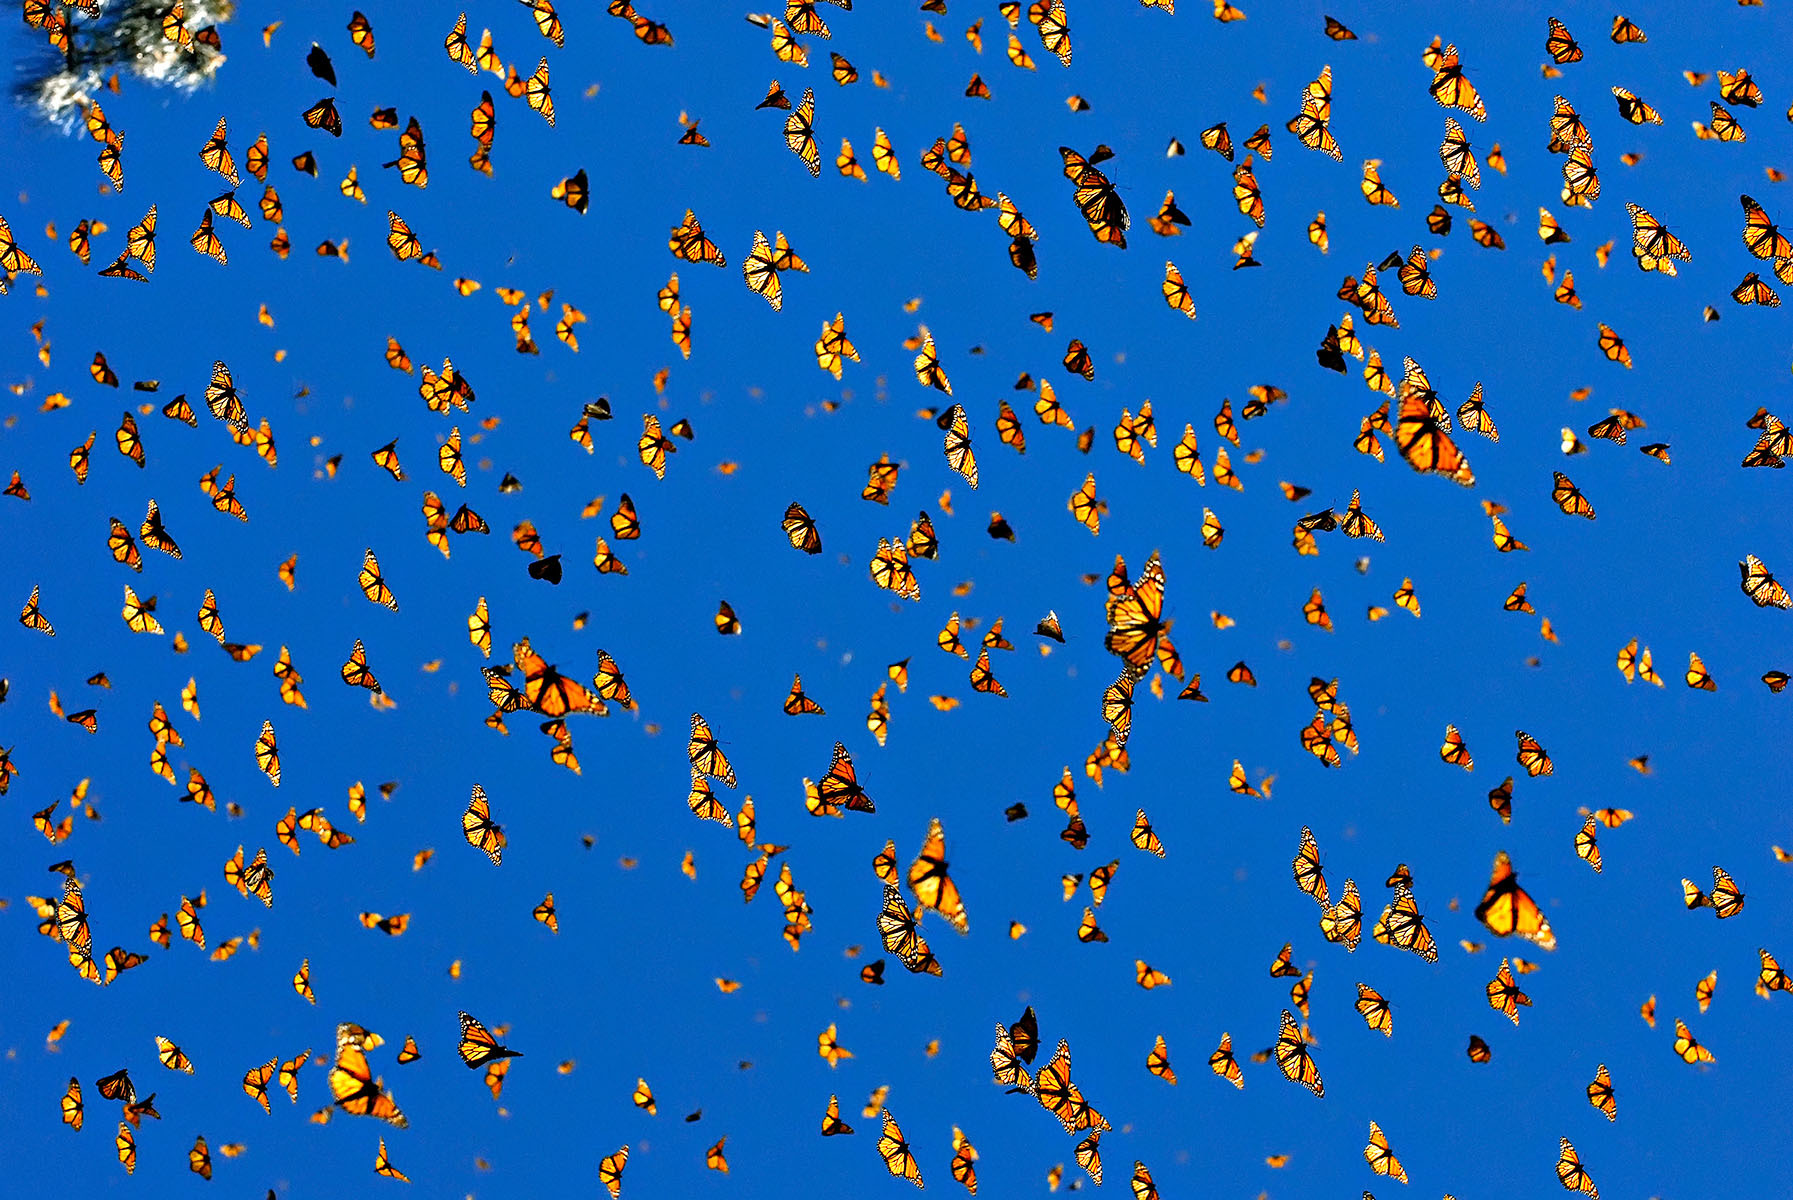 Бабочек легкая стая. Миграция бабочек монархов. Биосферный заповедник бабочки Монарх Мексика. Данаида Монарх миграция. Стая бабочек.